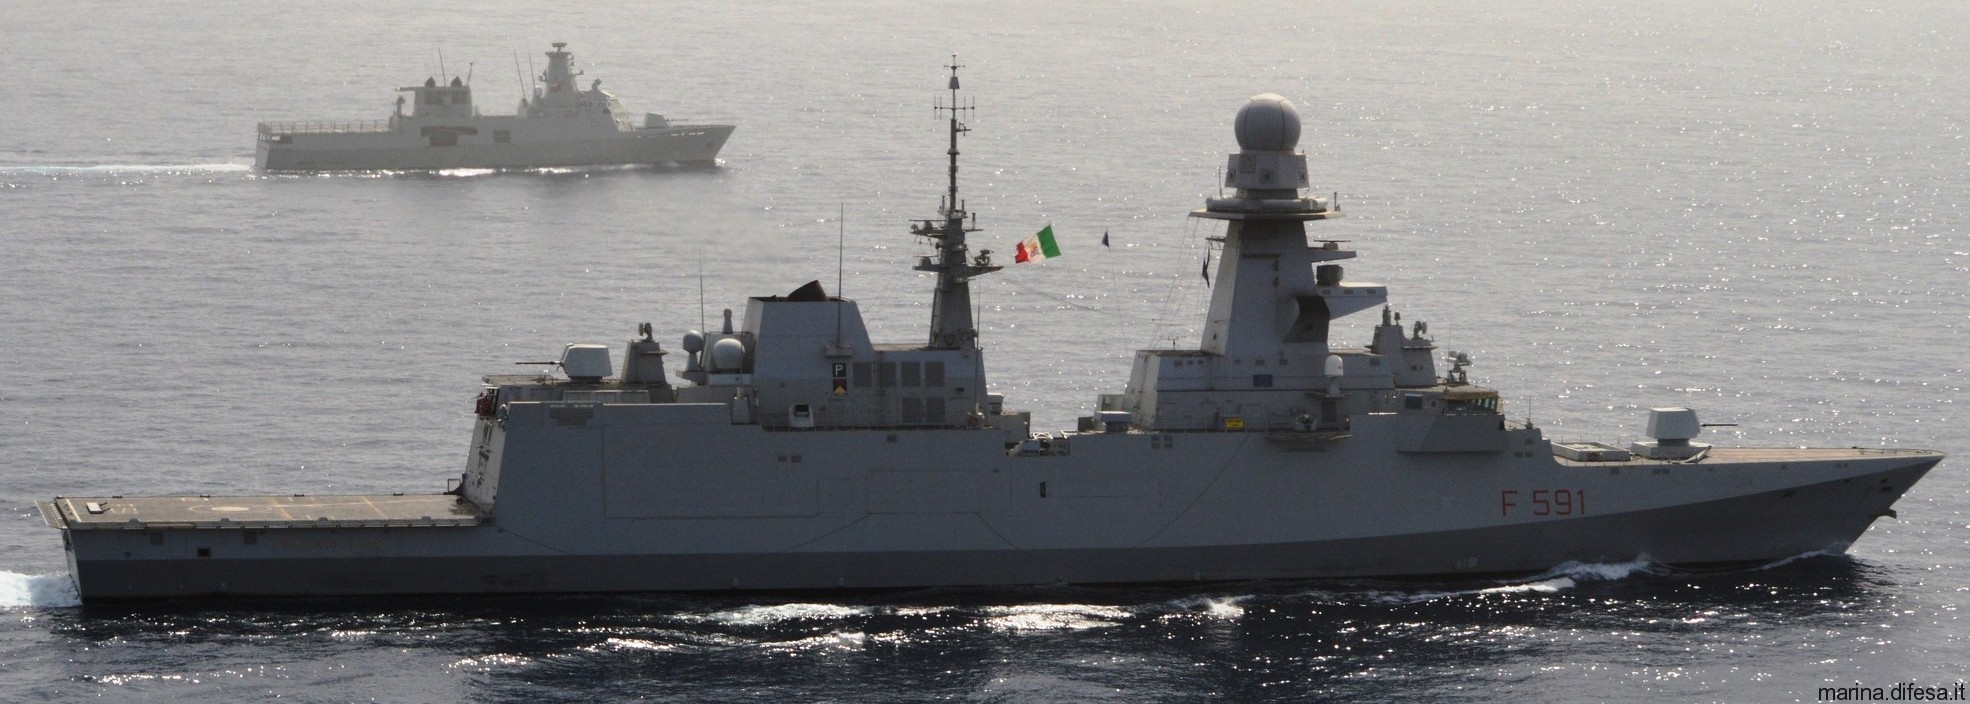 f-591 virginio fasan its nave bergamini fremm class guided missile frigate italian navy marina militare 39